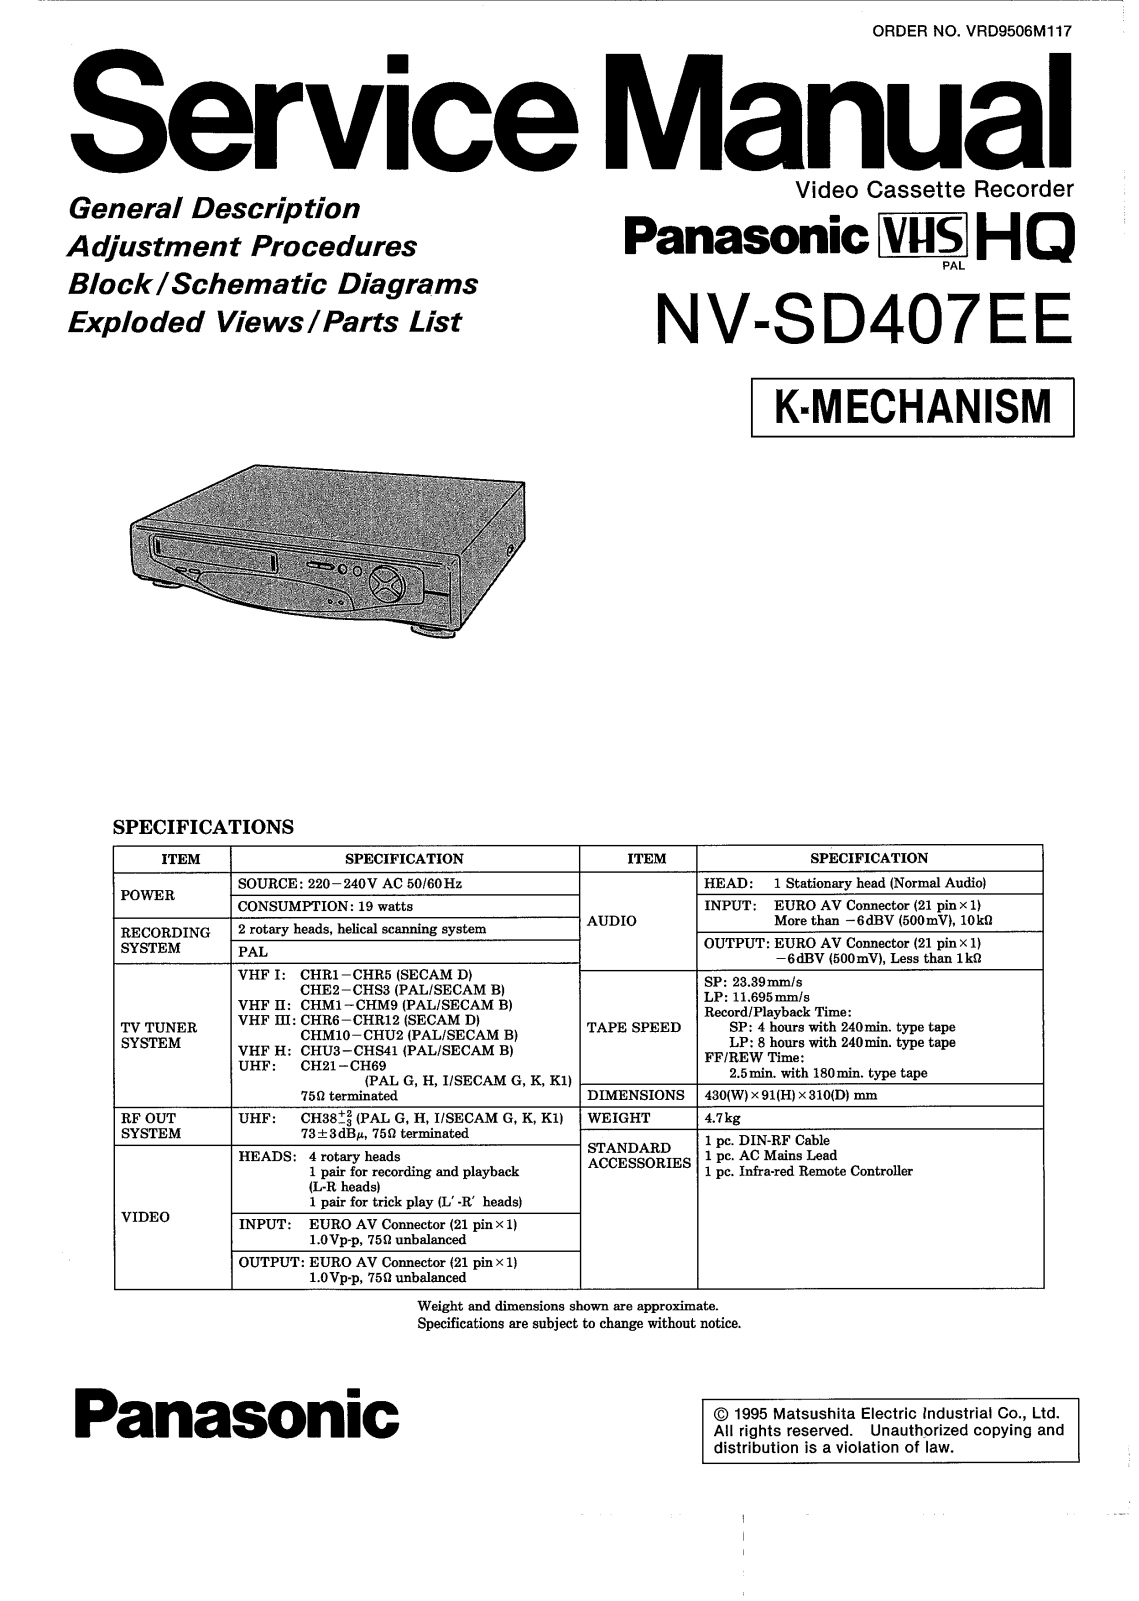 PANASONIC NV-SD407 Service Manual